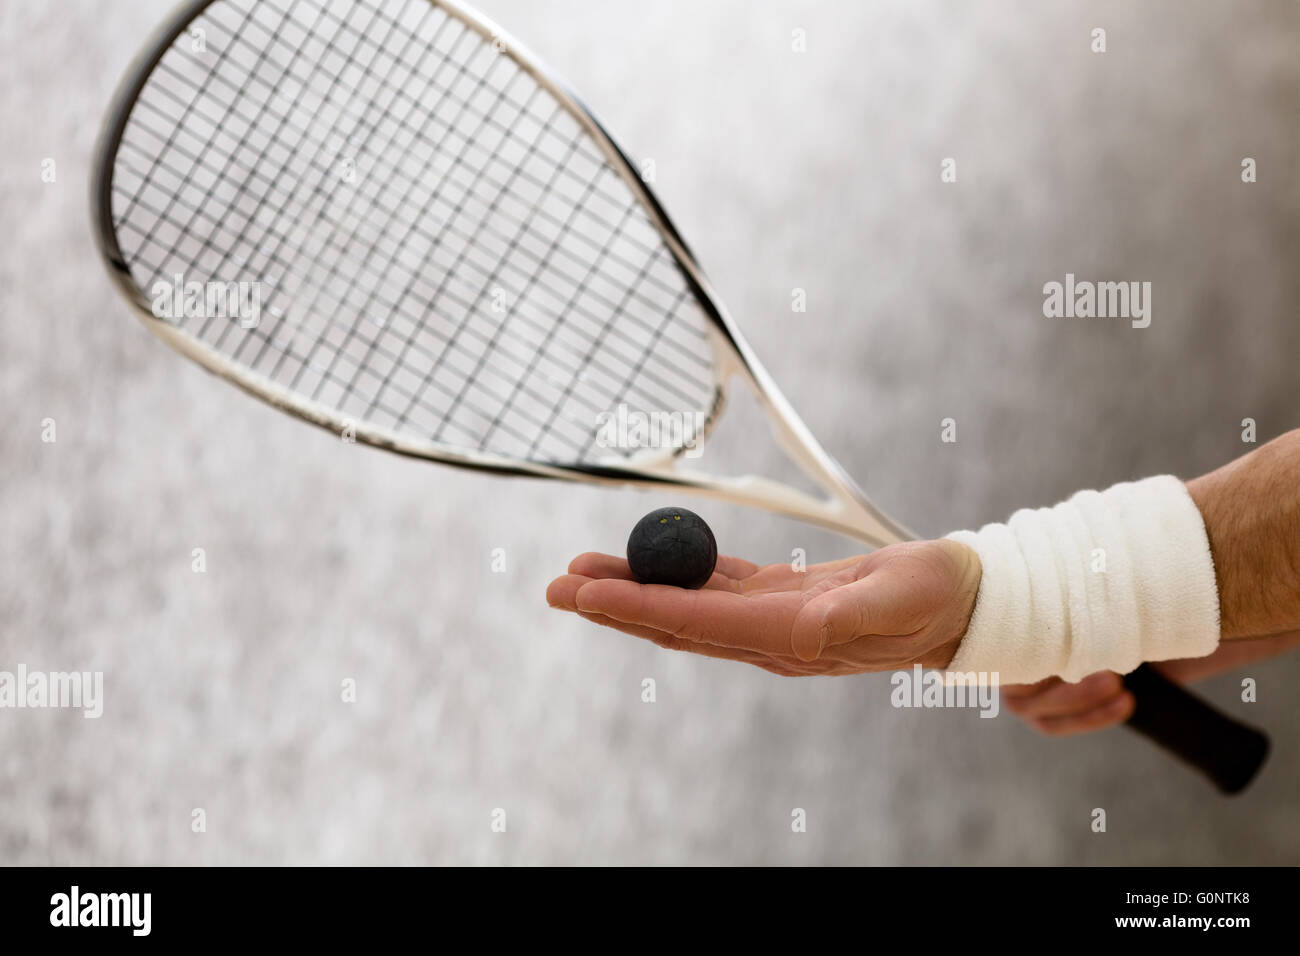 Squash racket closeup Stock Photo